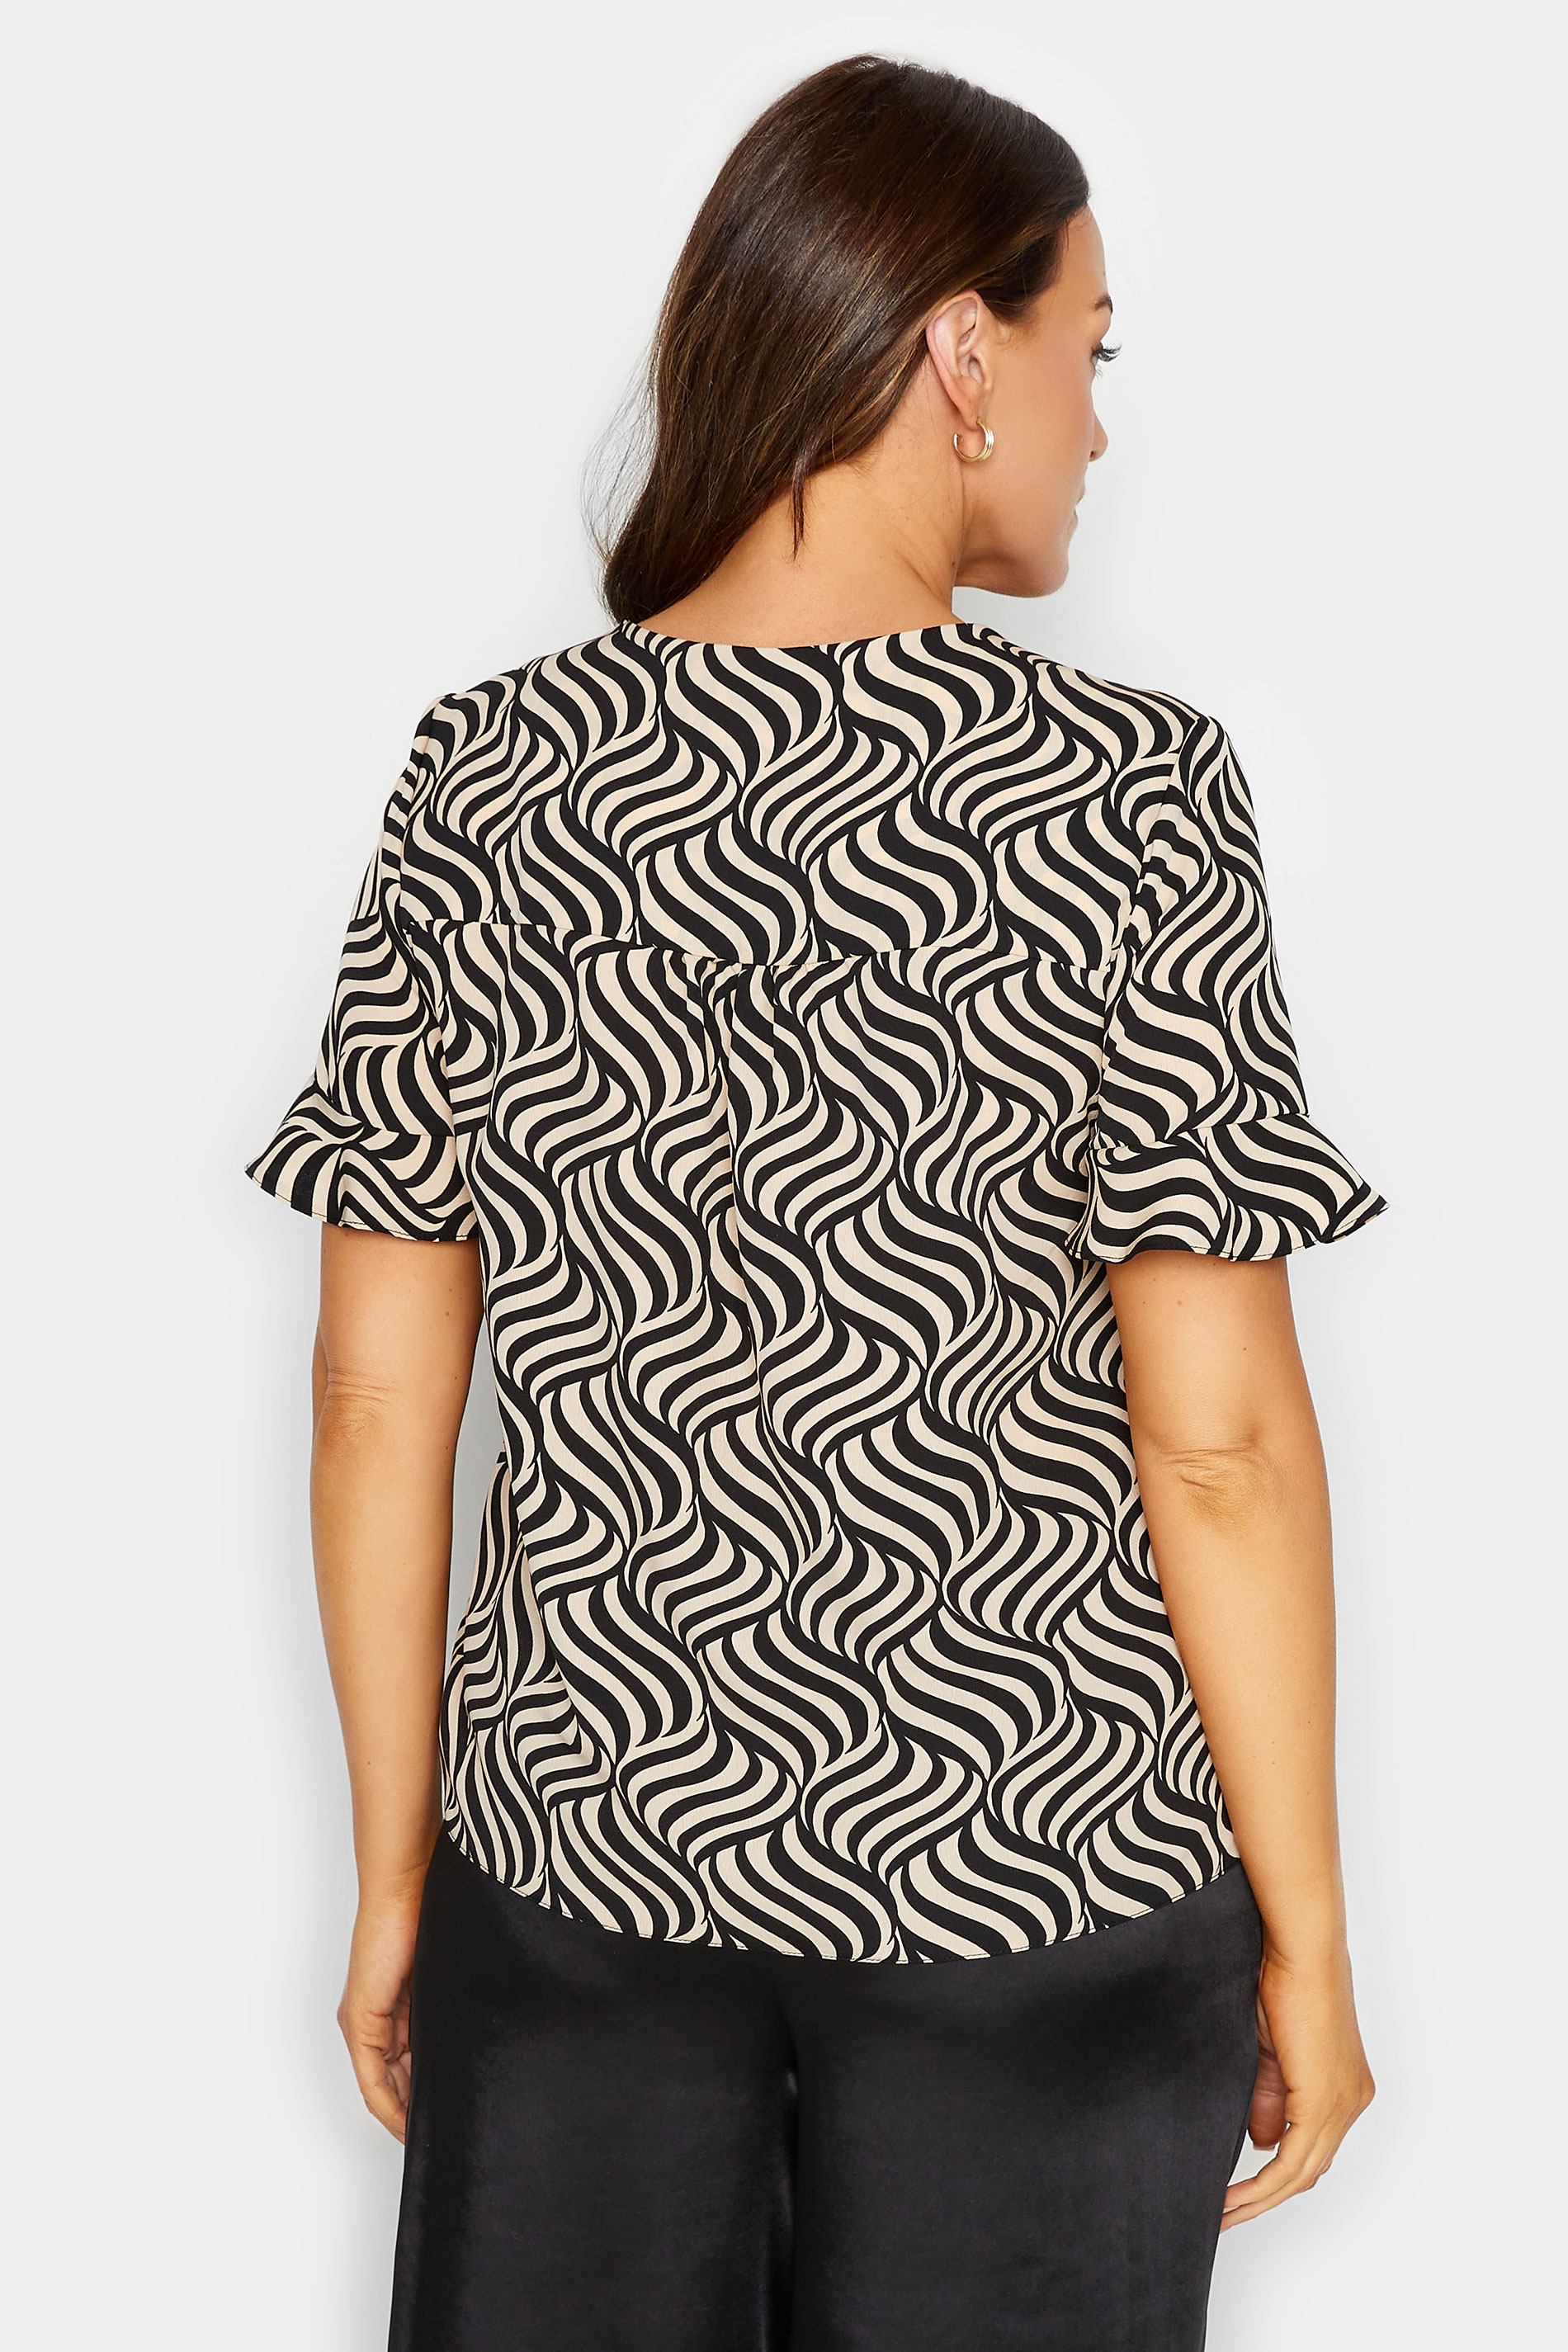 M&Co Black & White Swirl Print Frill Sleeve Blouse | M&Co 3